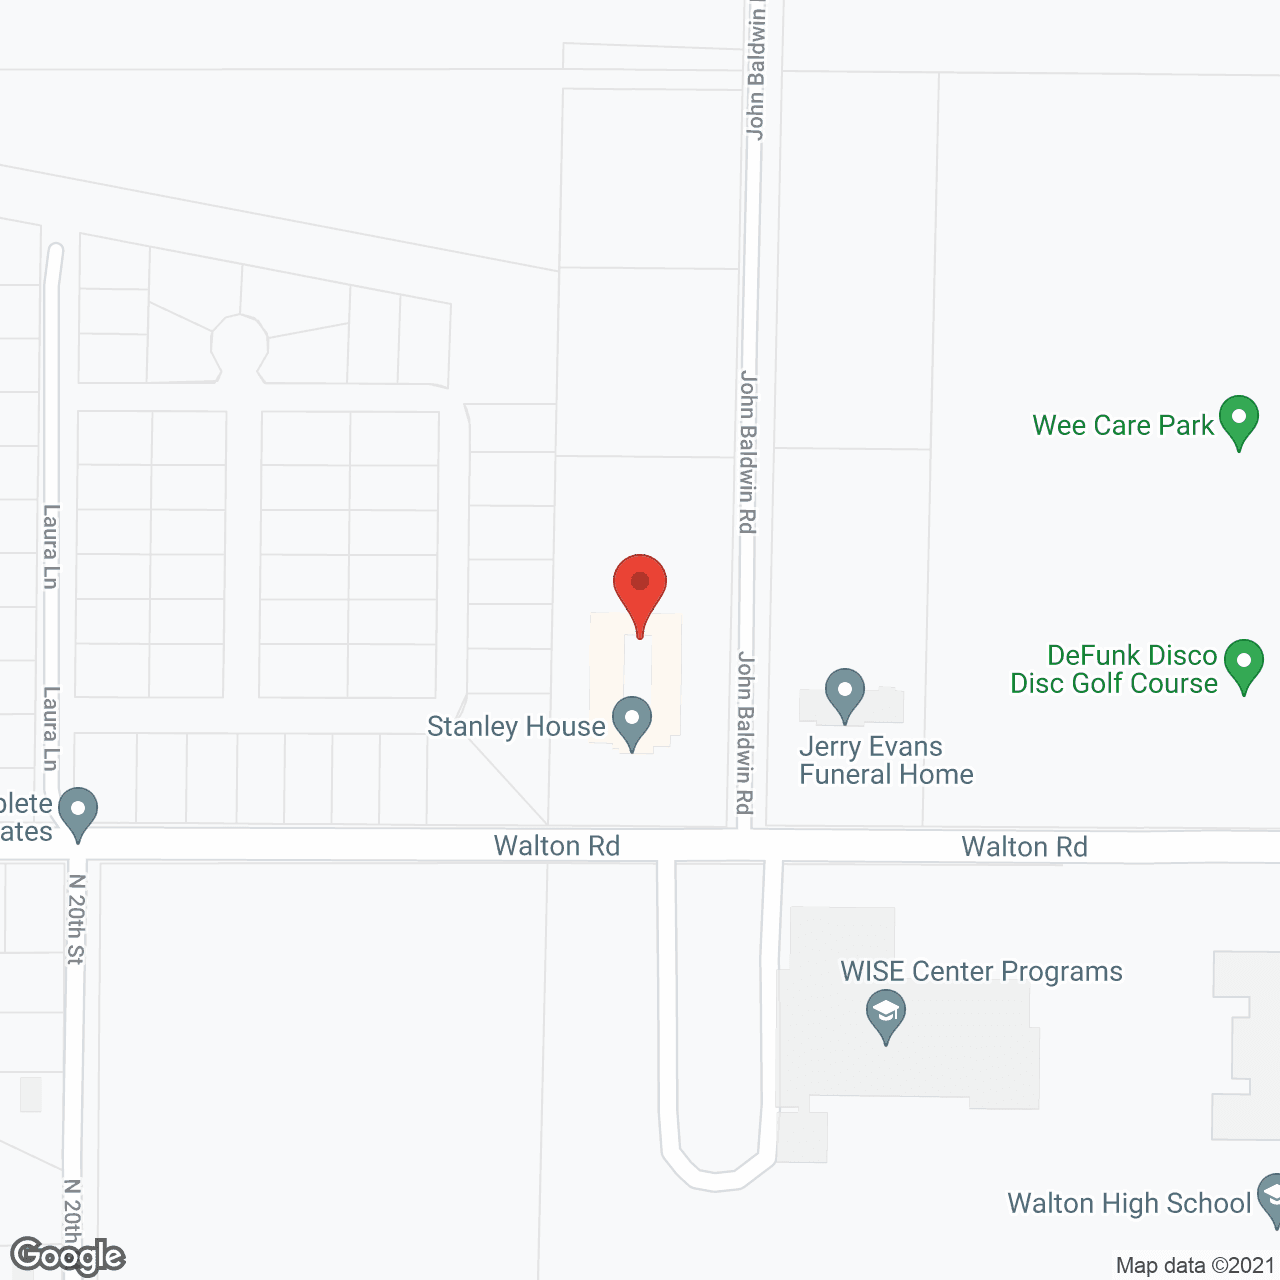 Sodalis DeFuniak Springs in google map